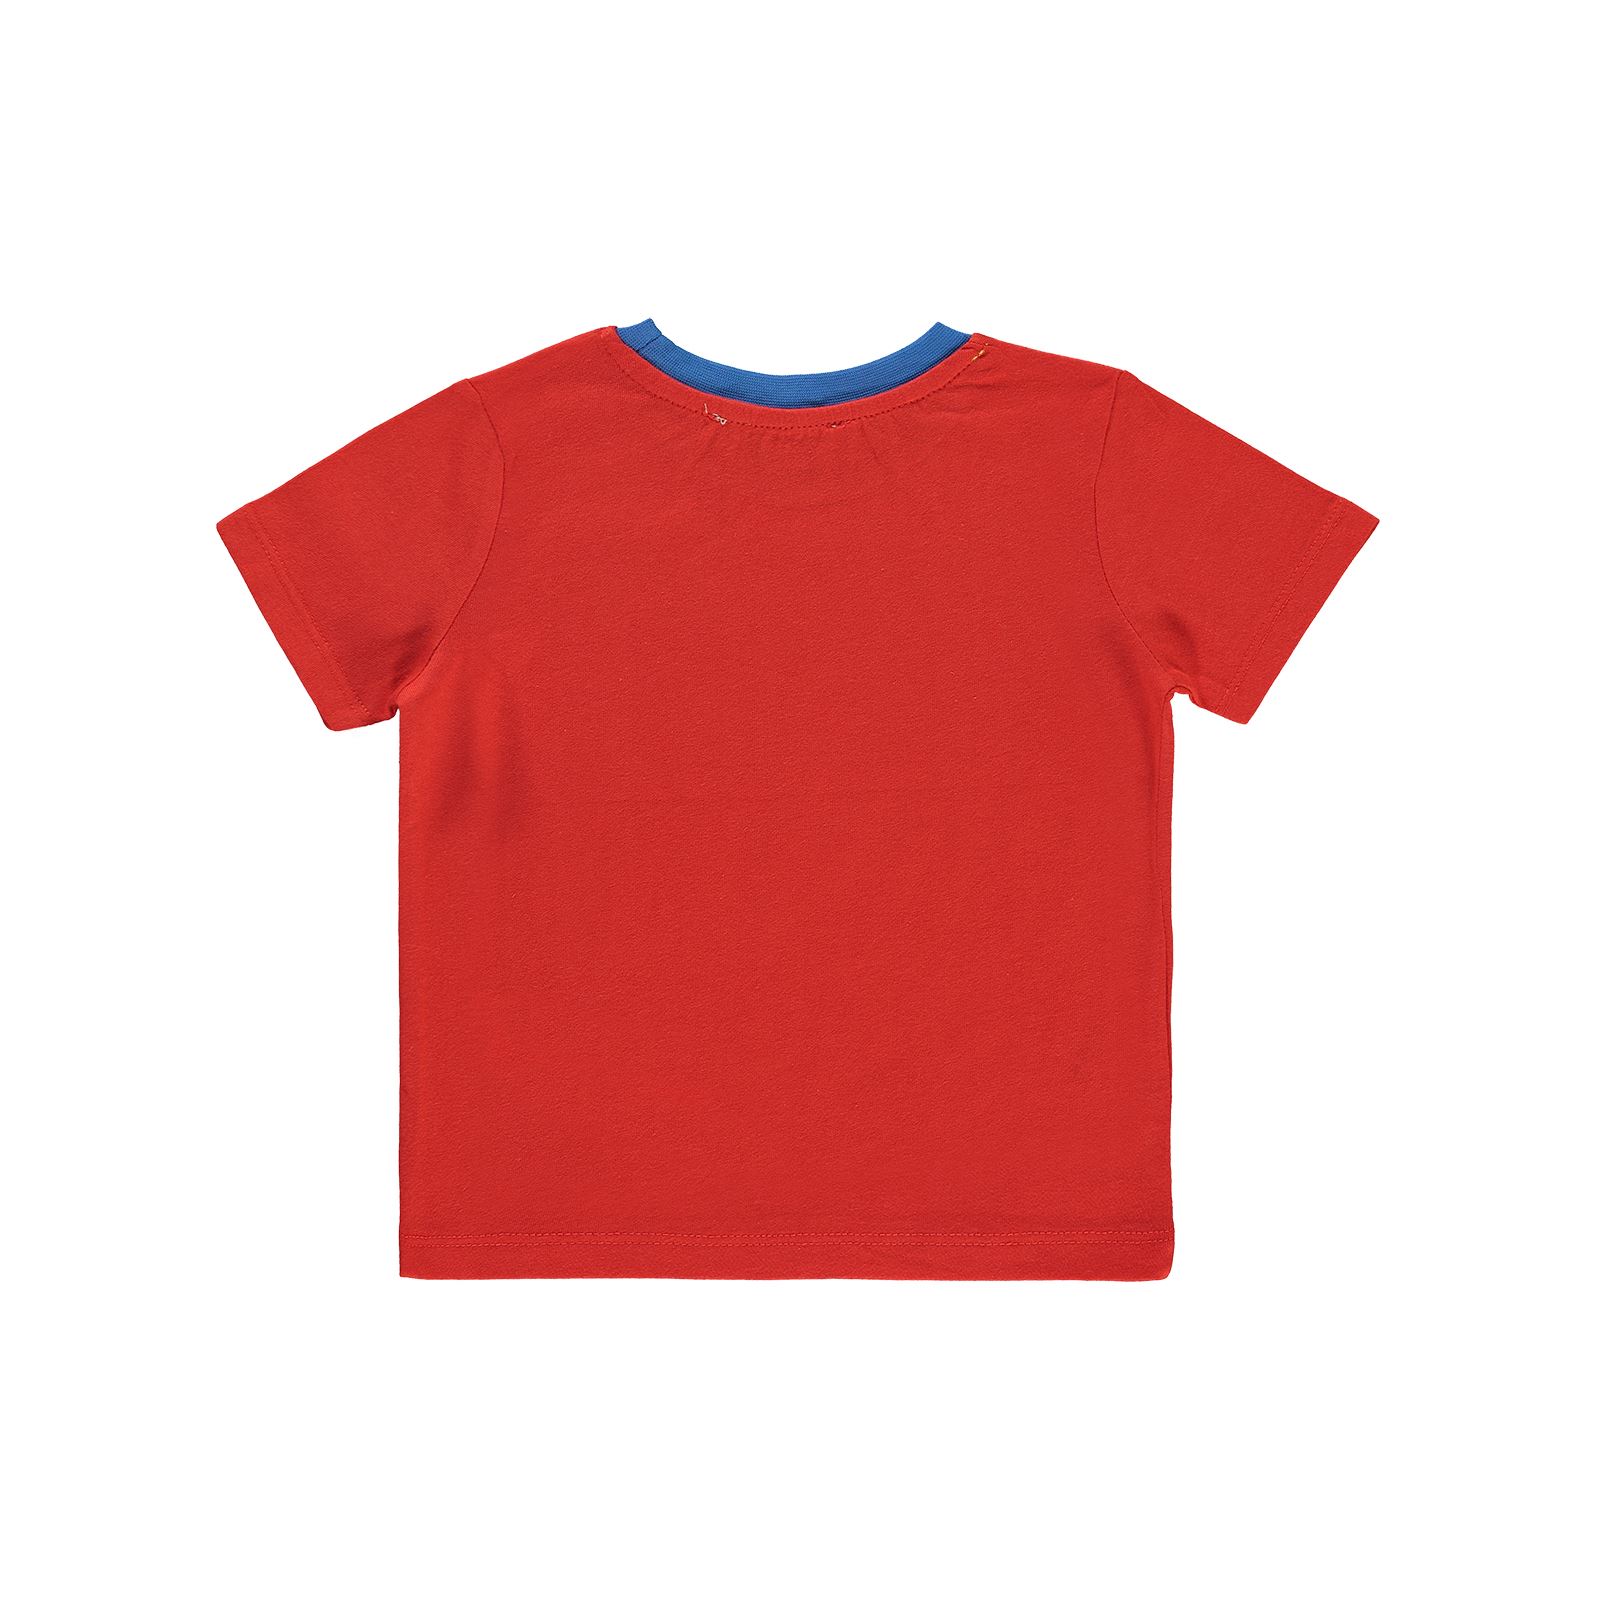 Small Socıety Erkek Çocuk Tişört 2-7 Yaş Kırmızı